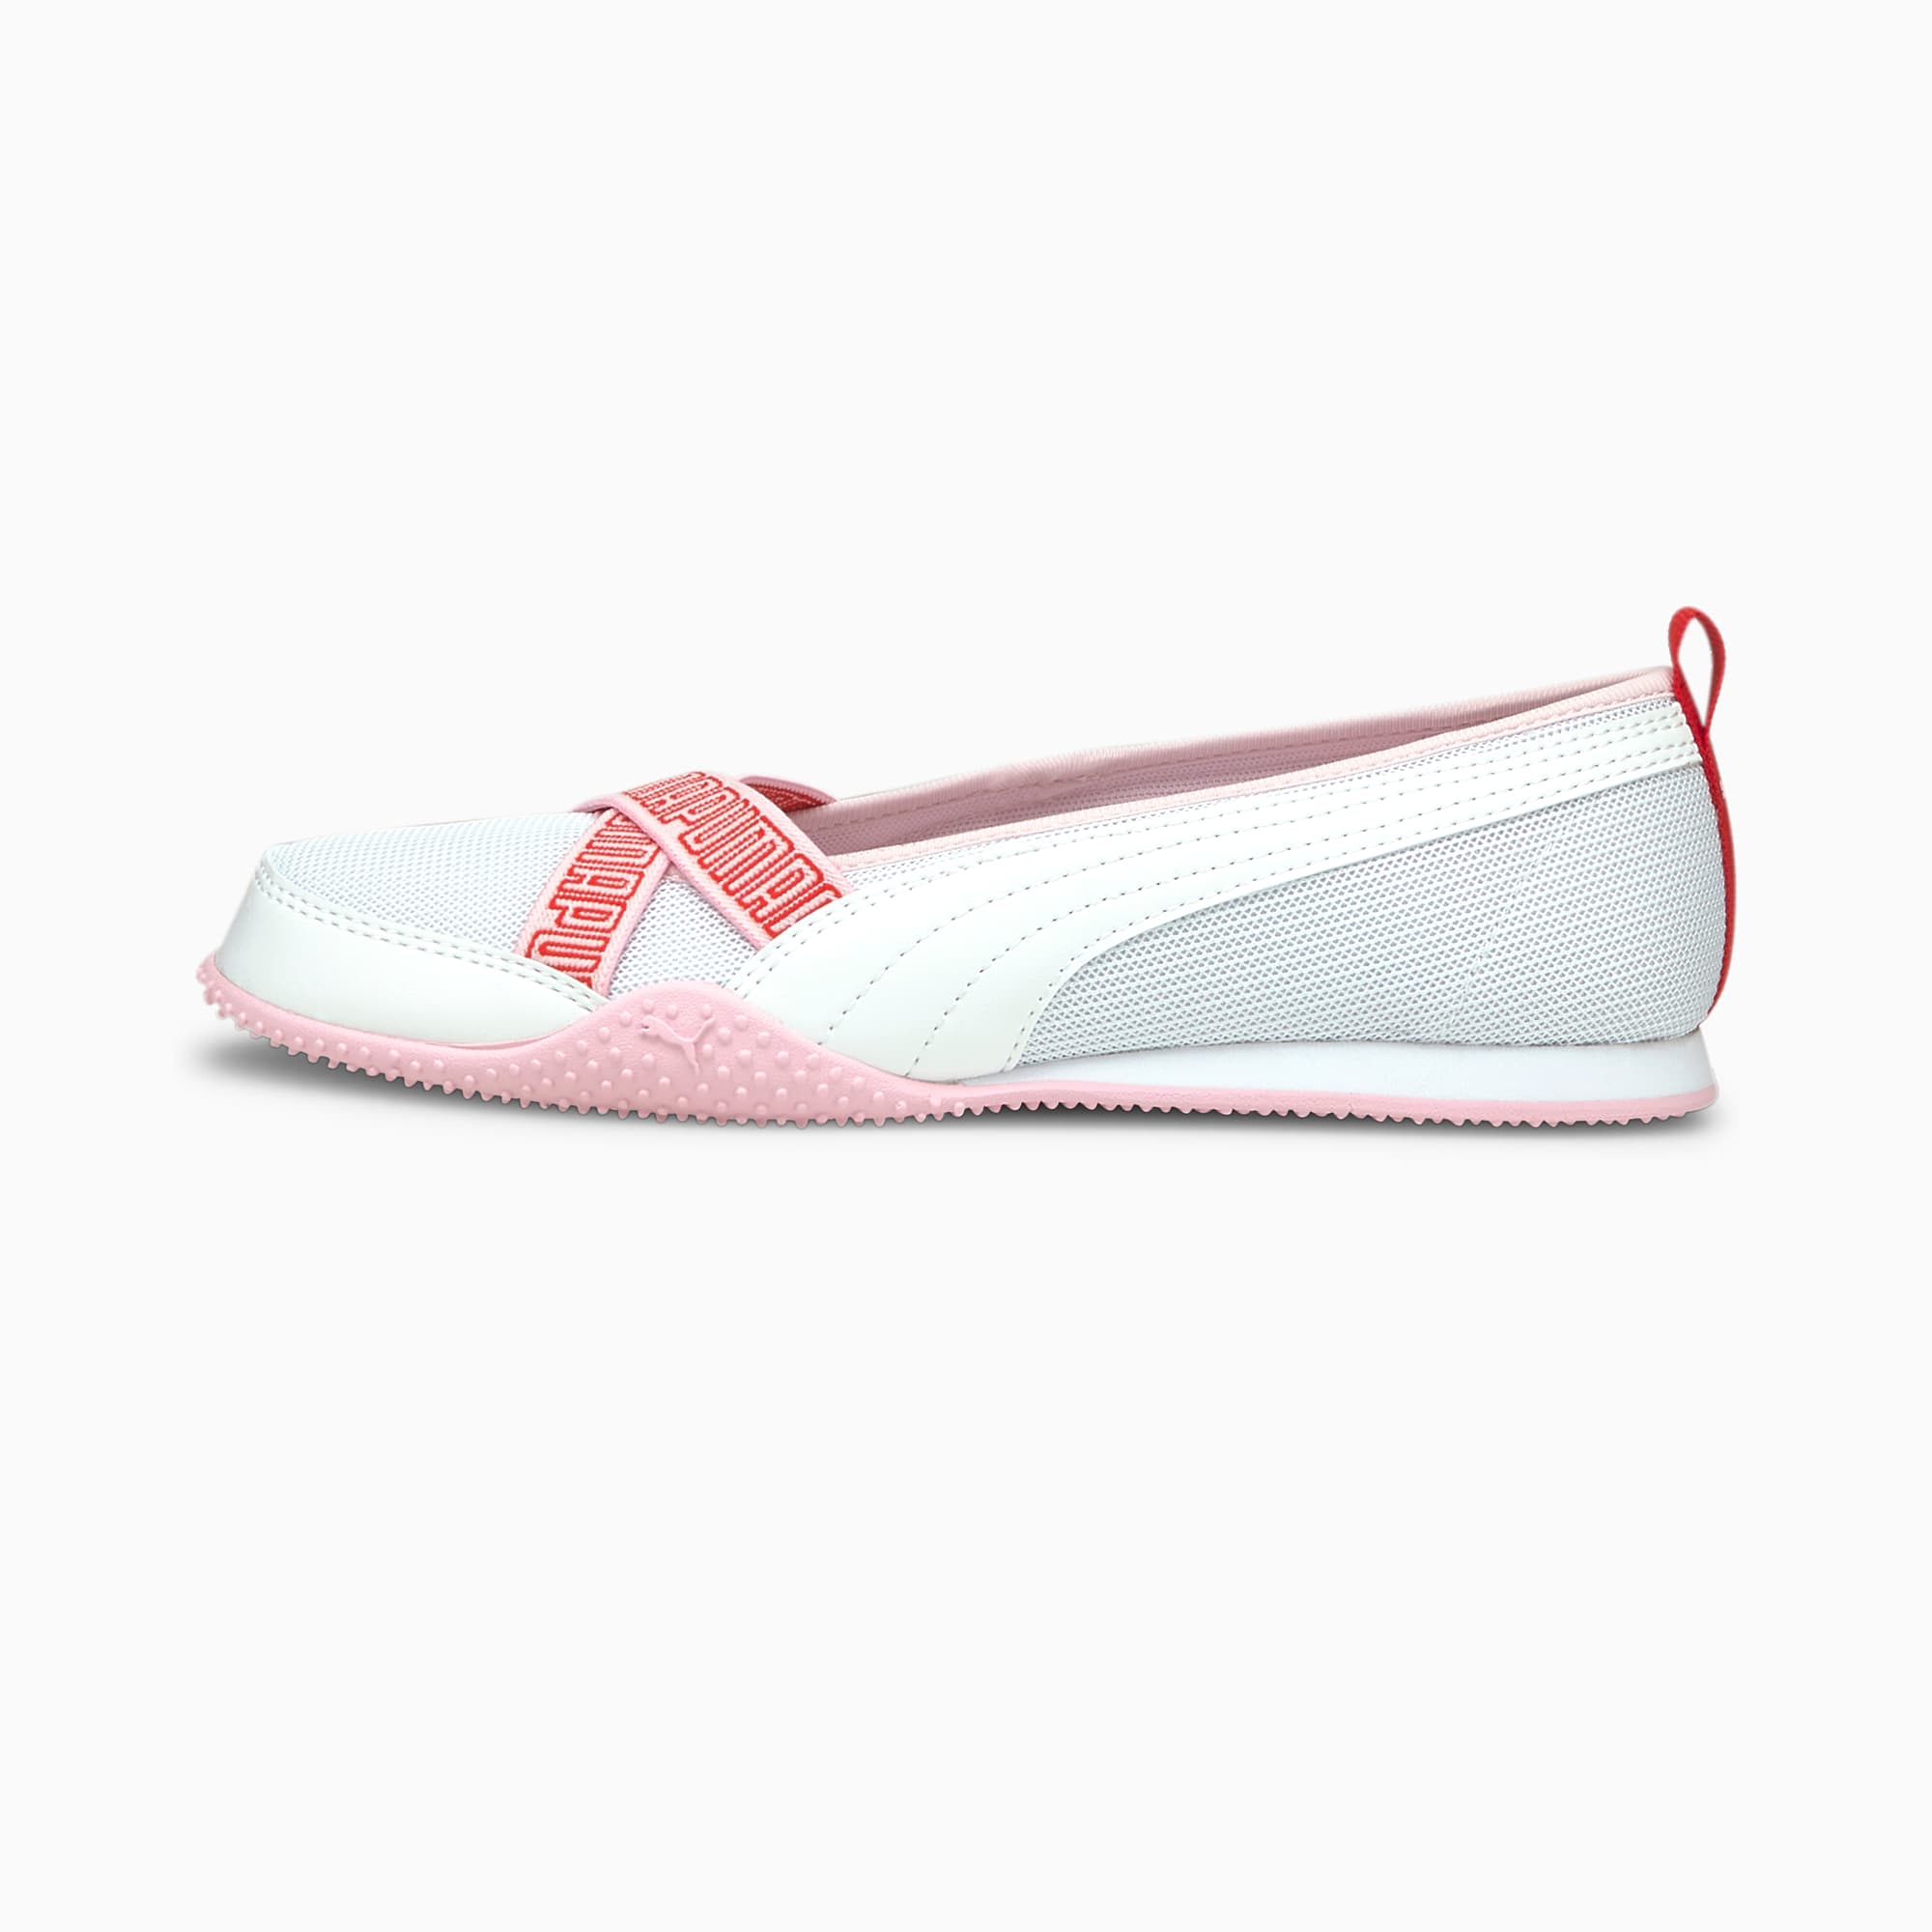 invoegen onregelmatig Permanent Bella Ballerina Women's Shoes | Puma White-Puma White-Pink Lady | PUMA  Shopback x PUMA | PUMA